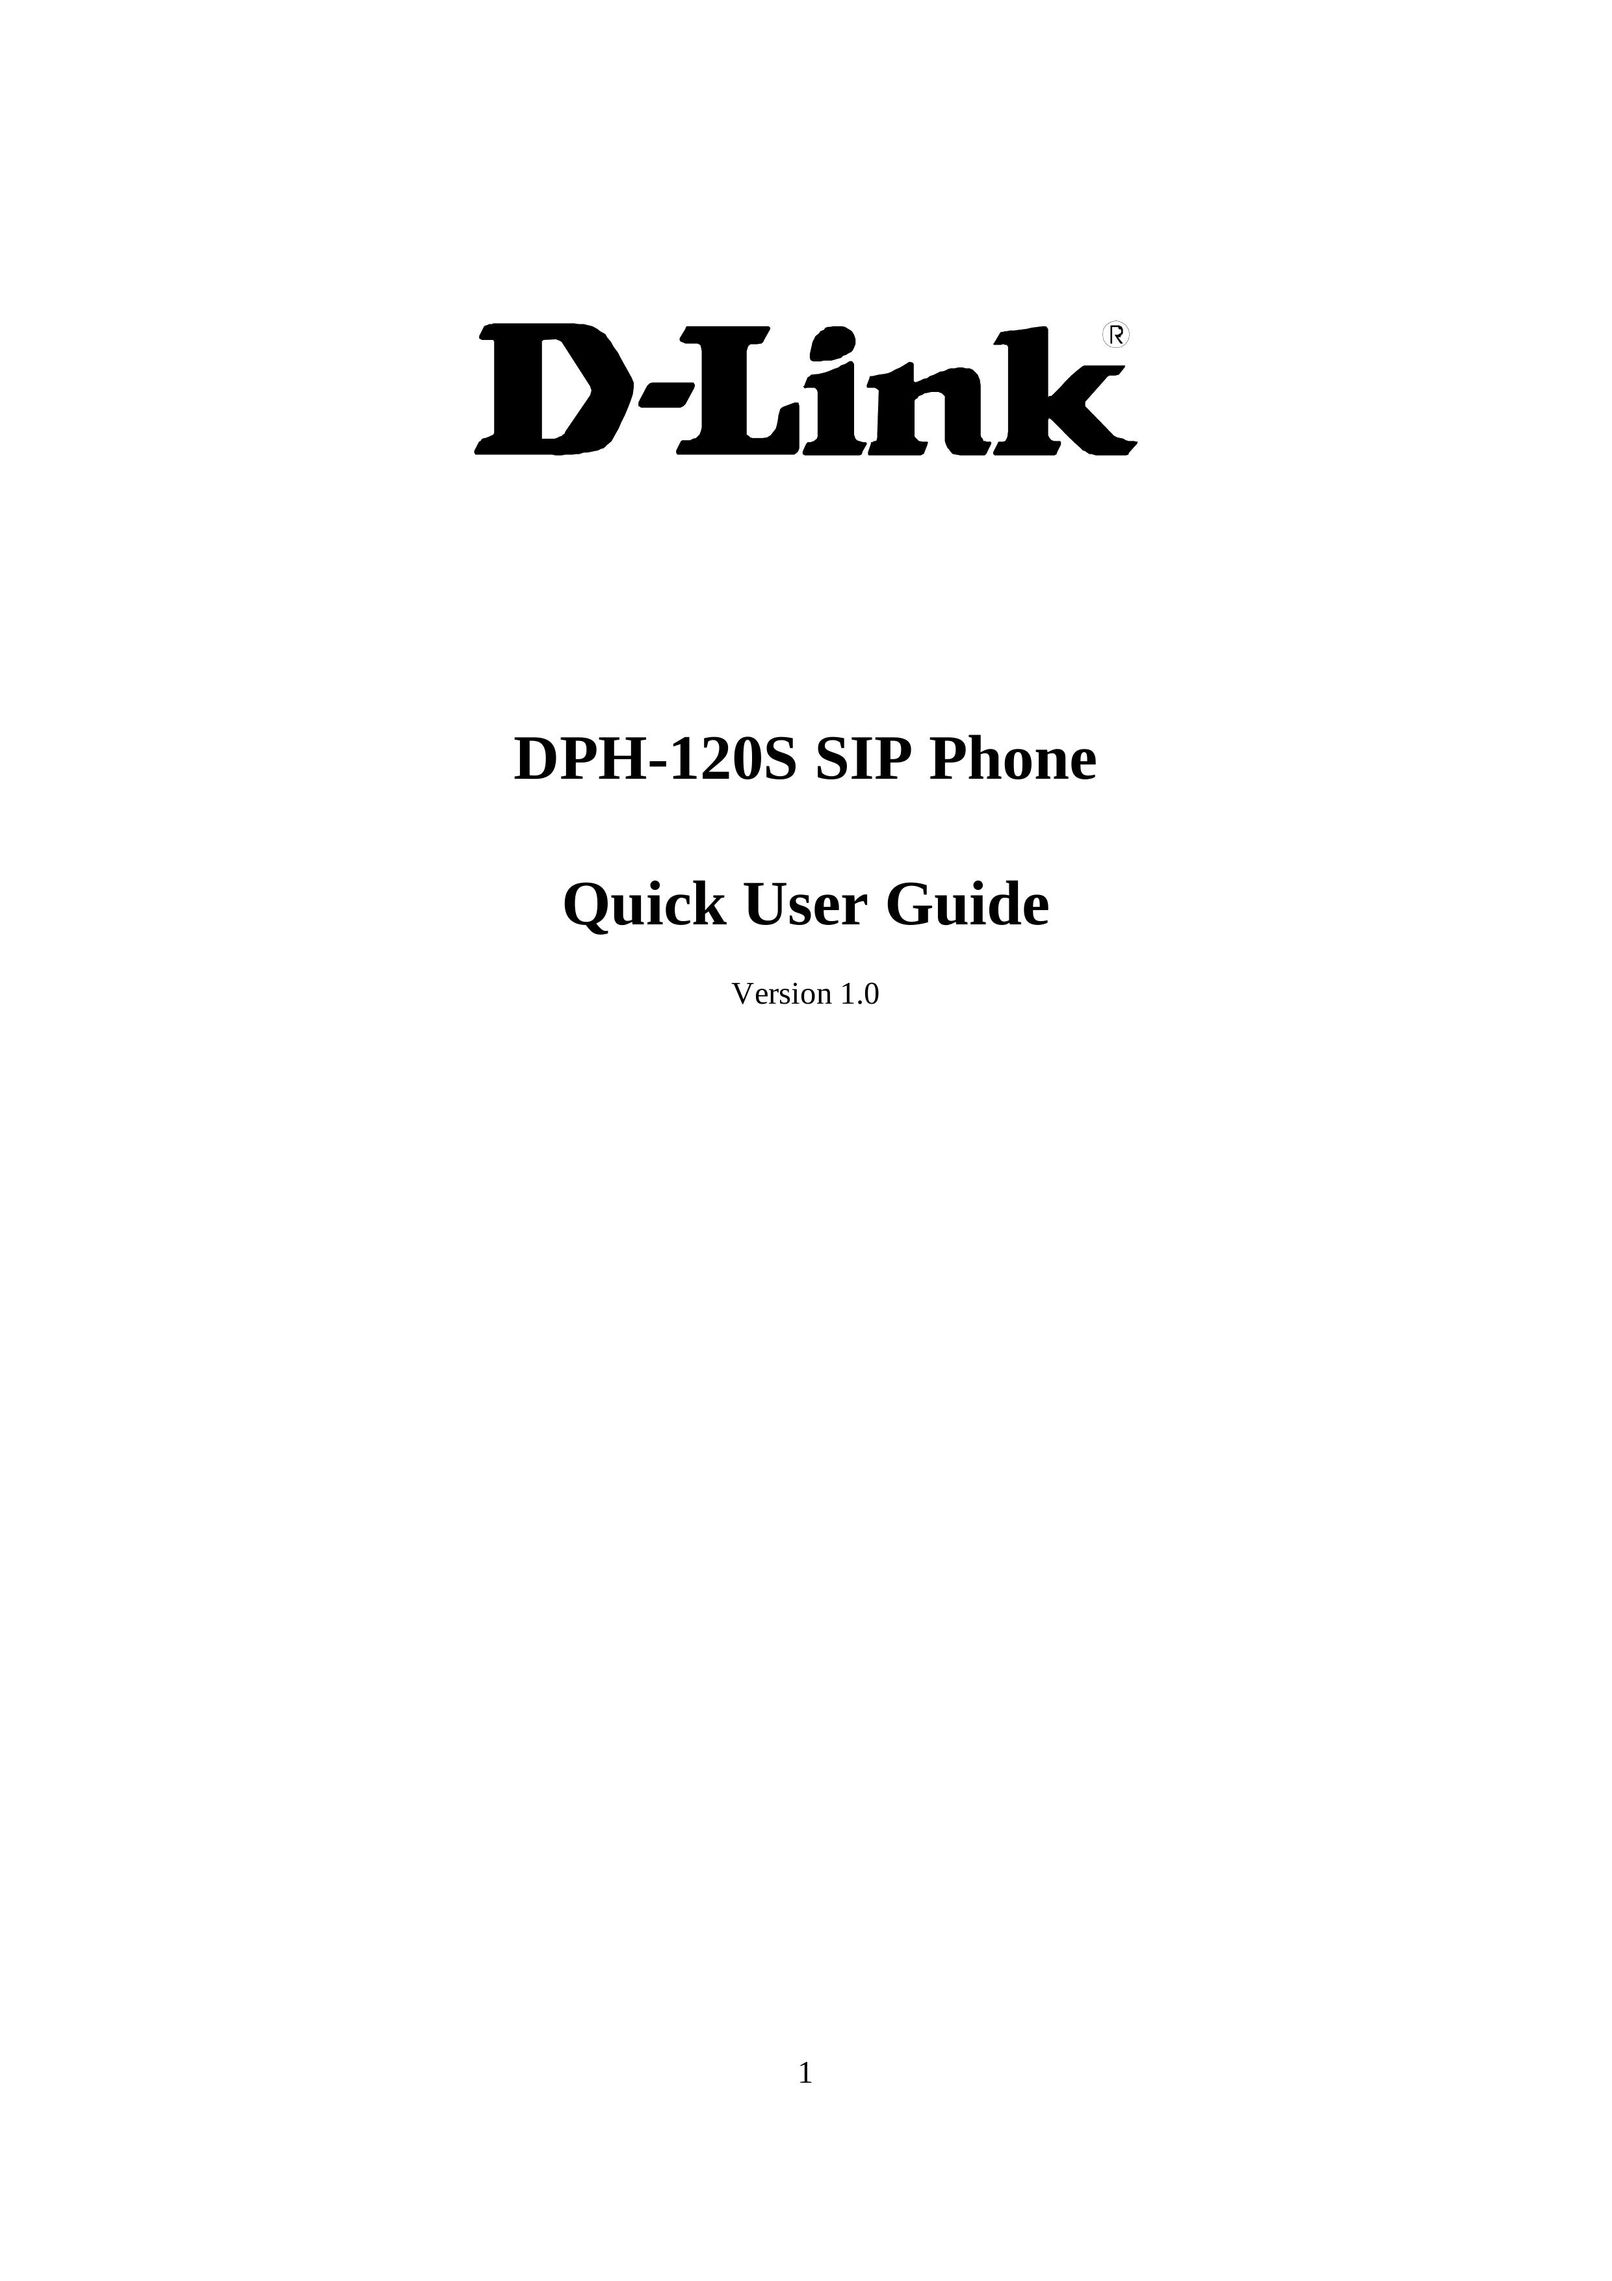 D-Link DPH-120S Answering Machine User Manual